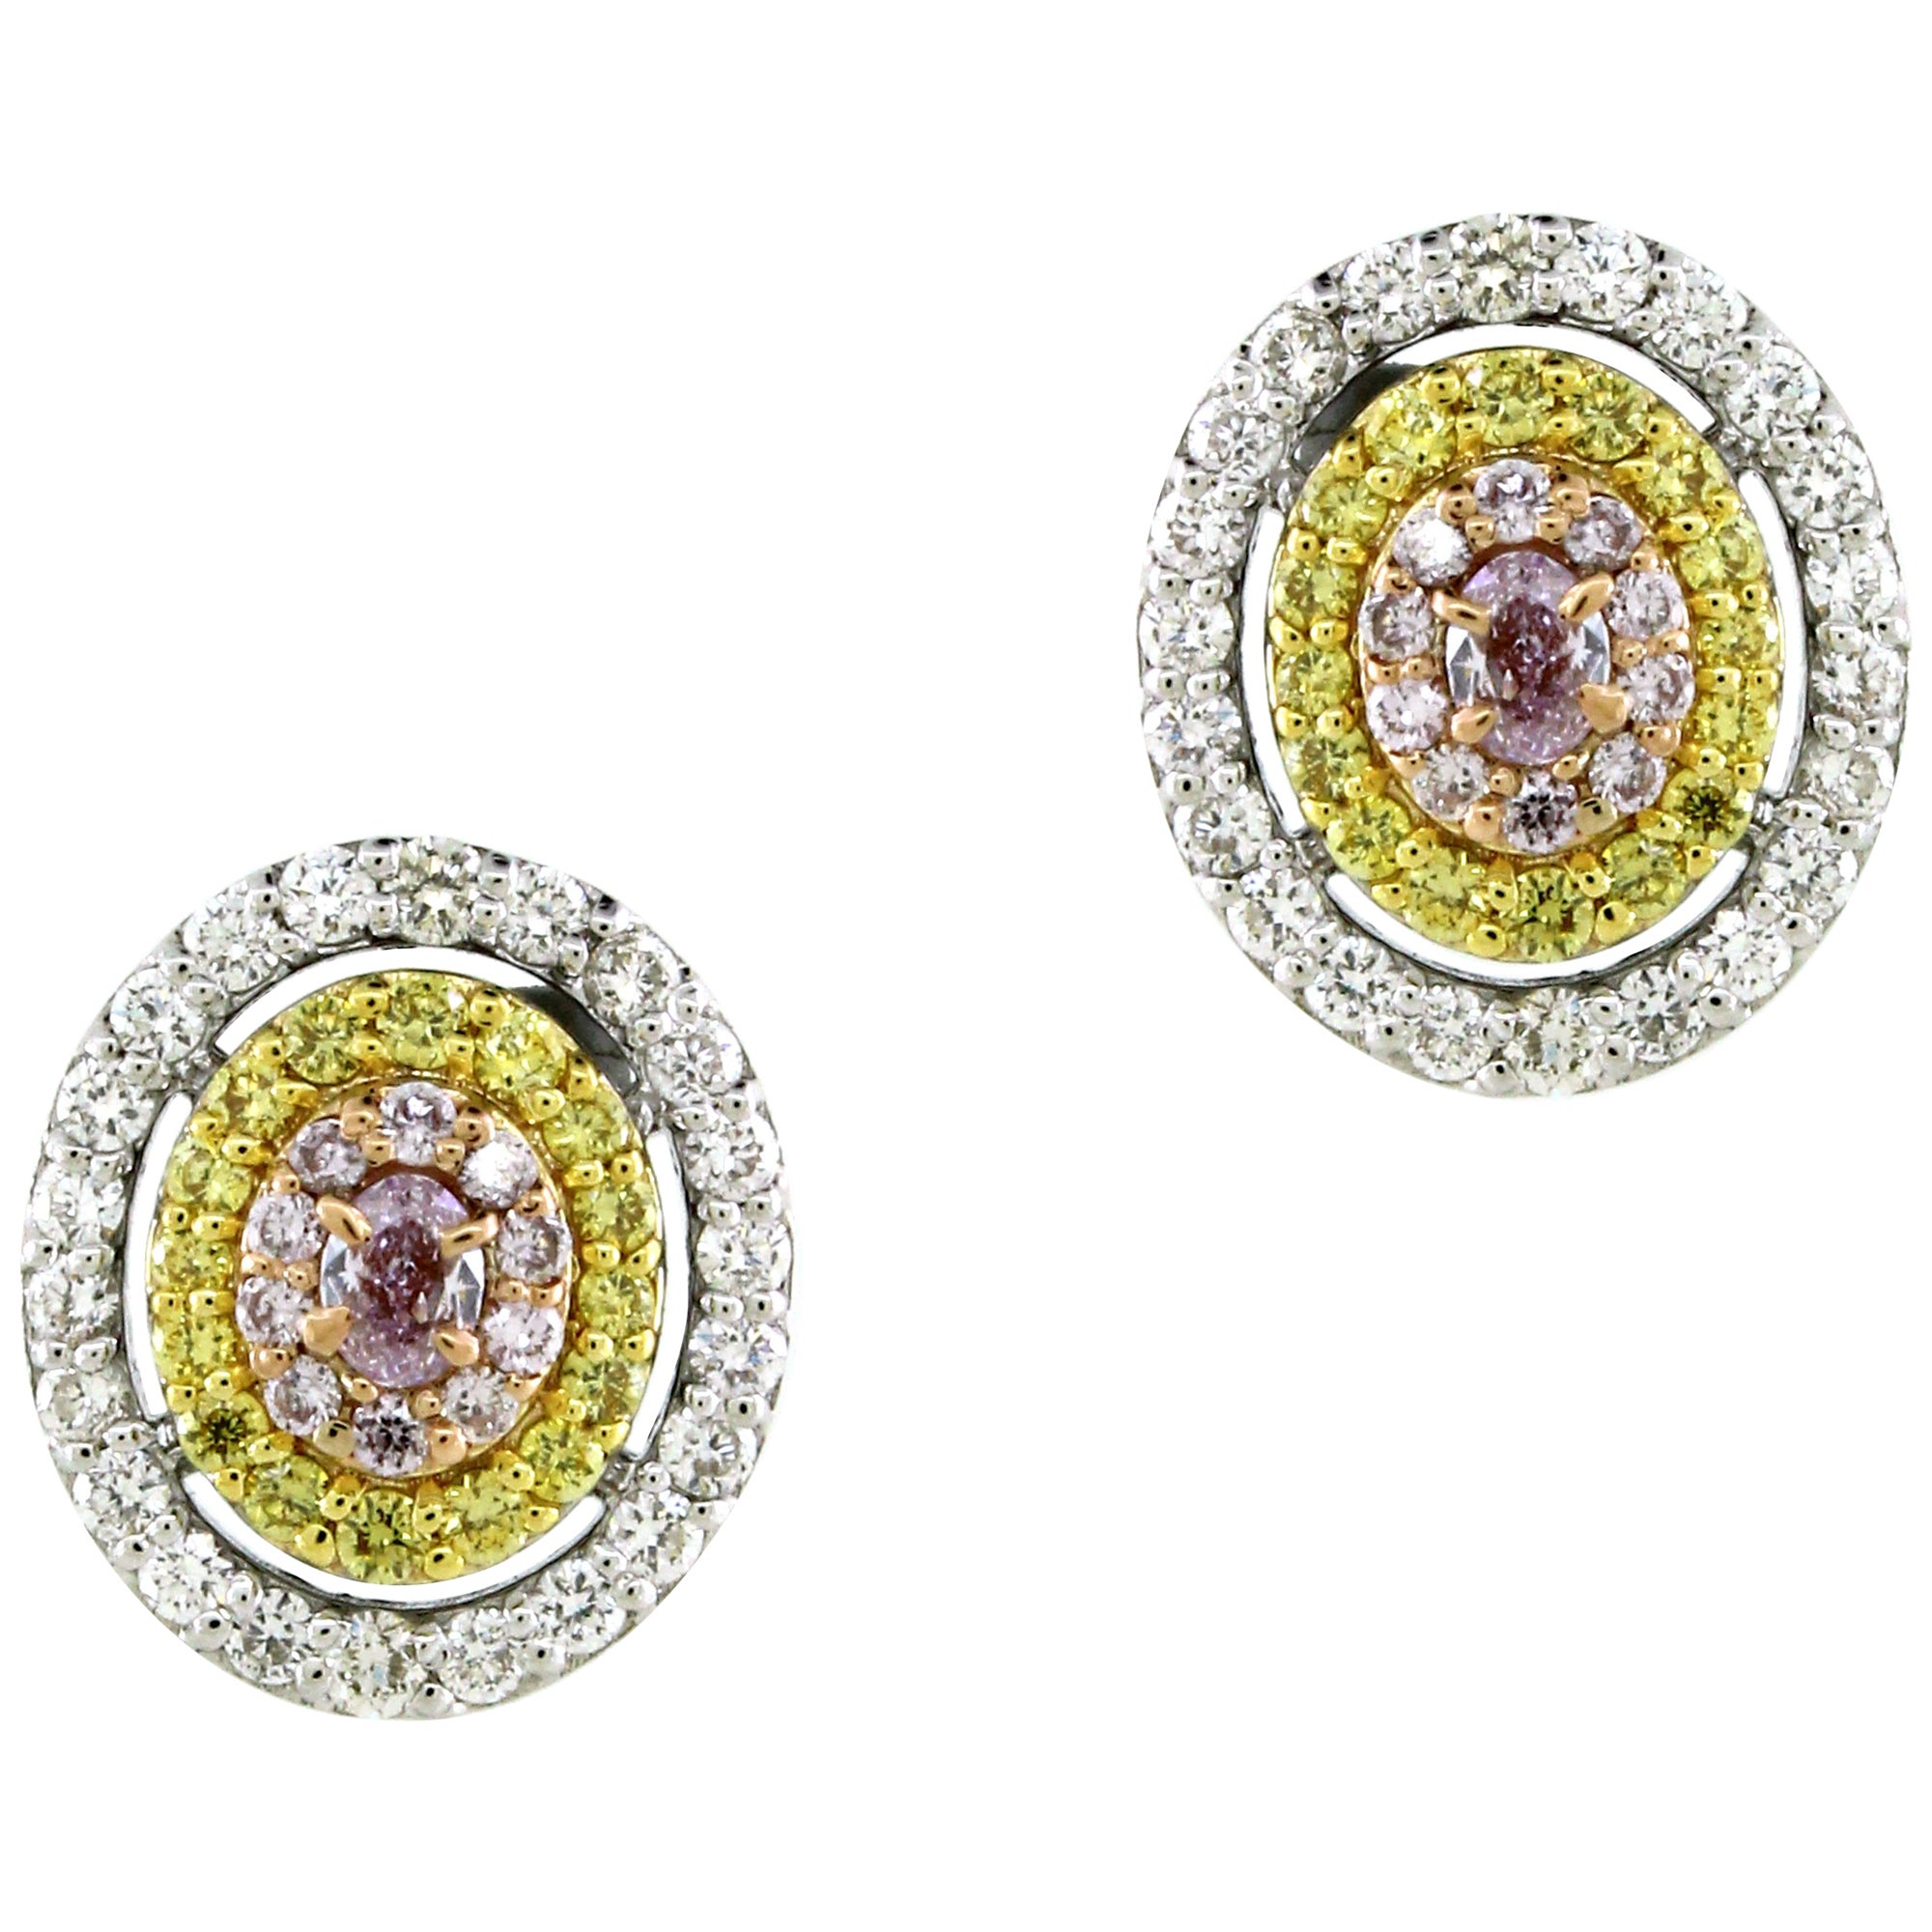 0.78 cts of Fancy Color Diamond Stud Earrings For Sale